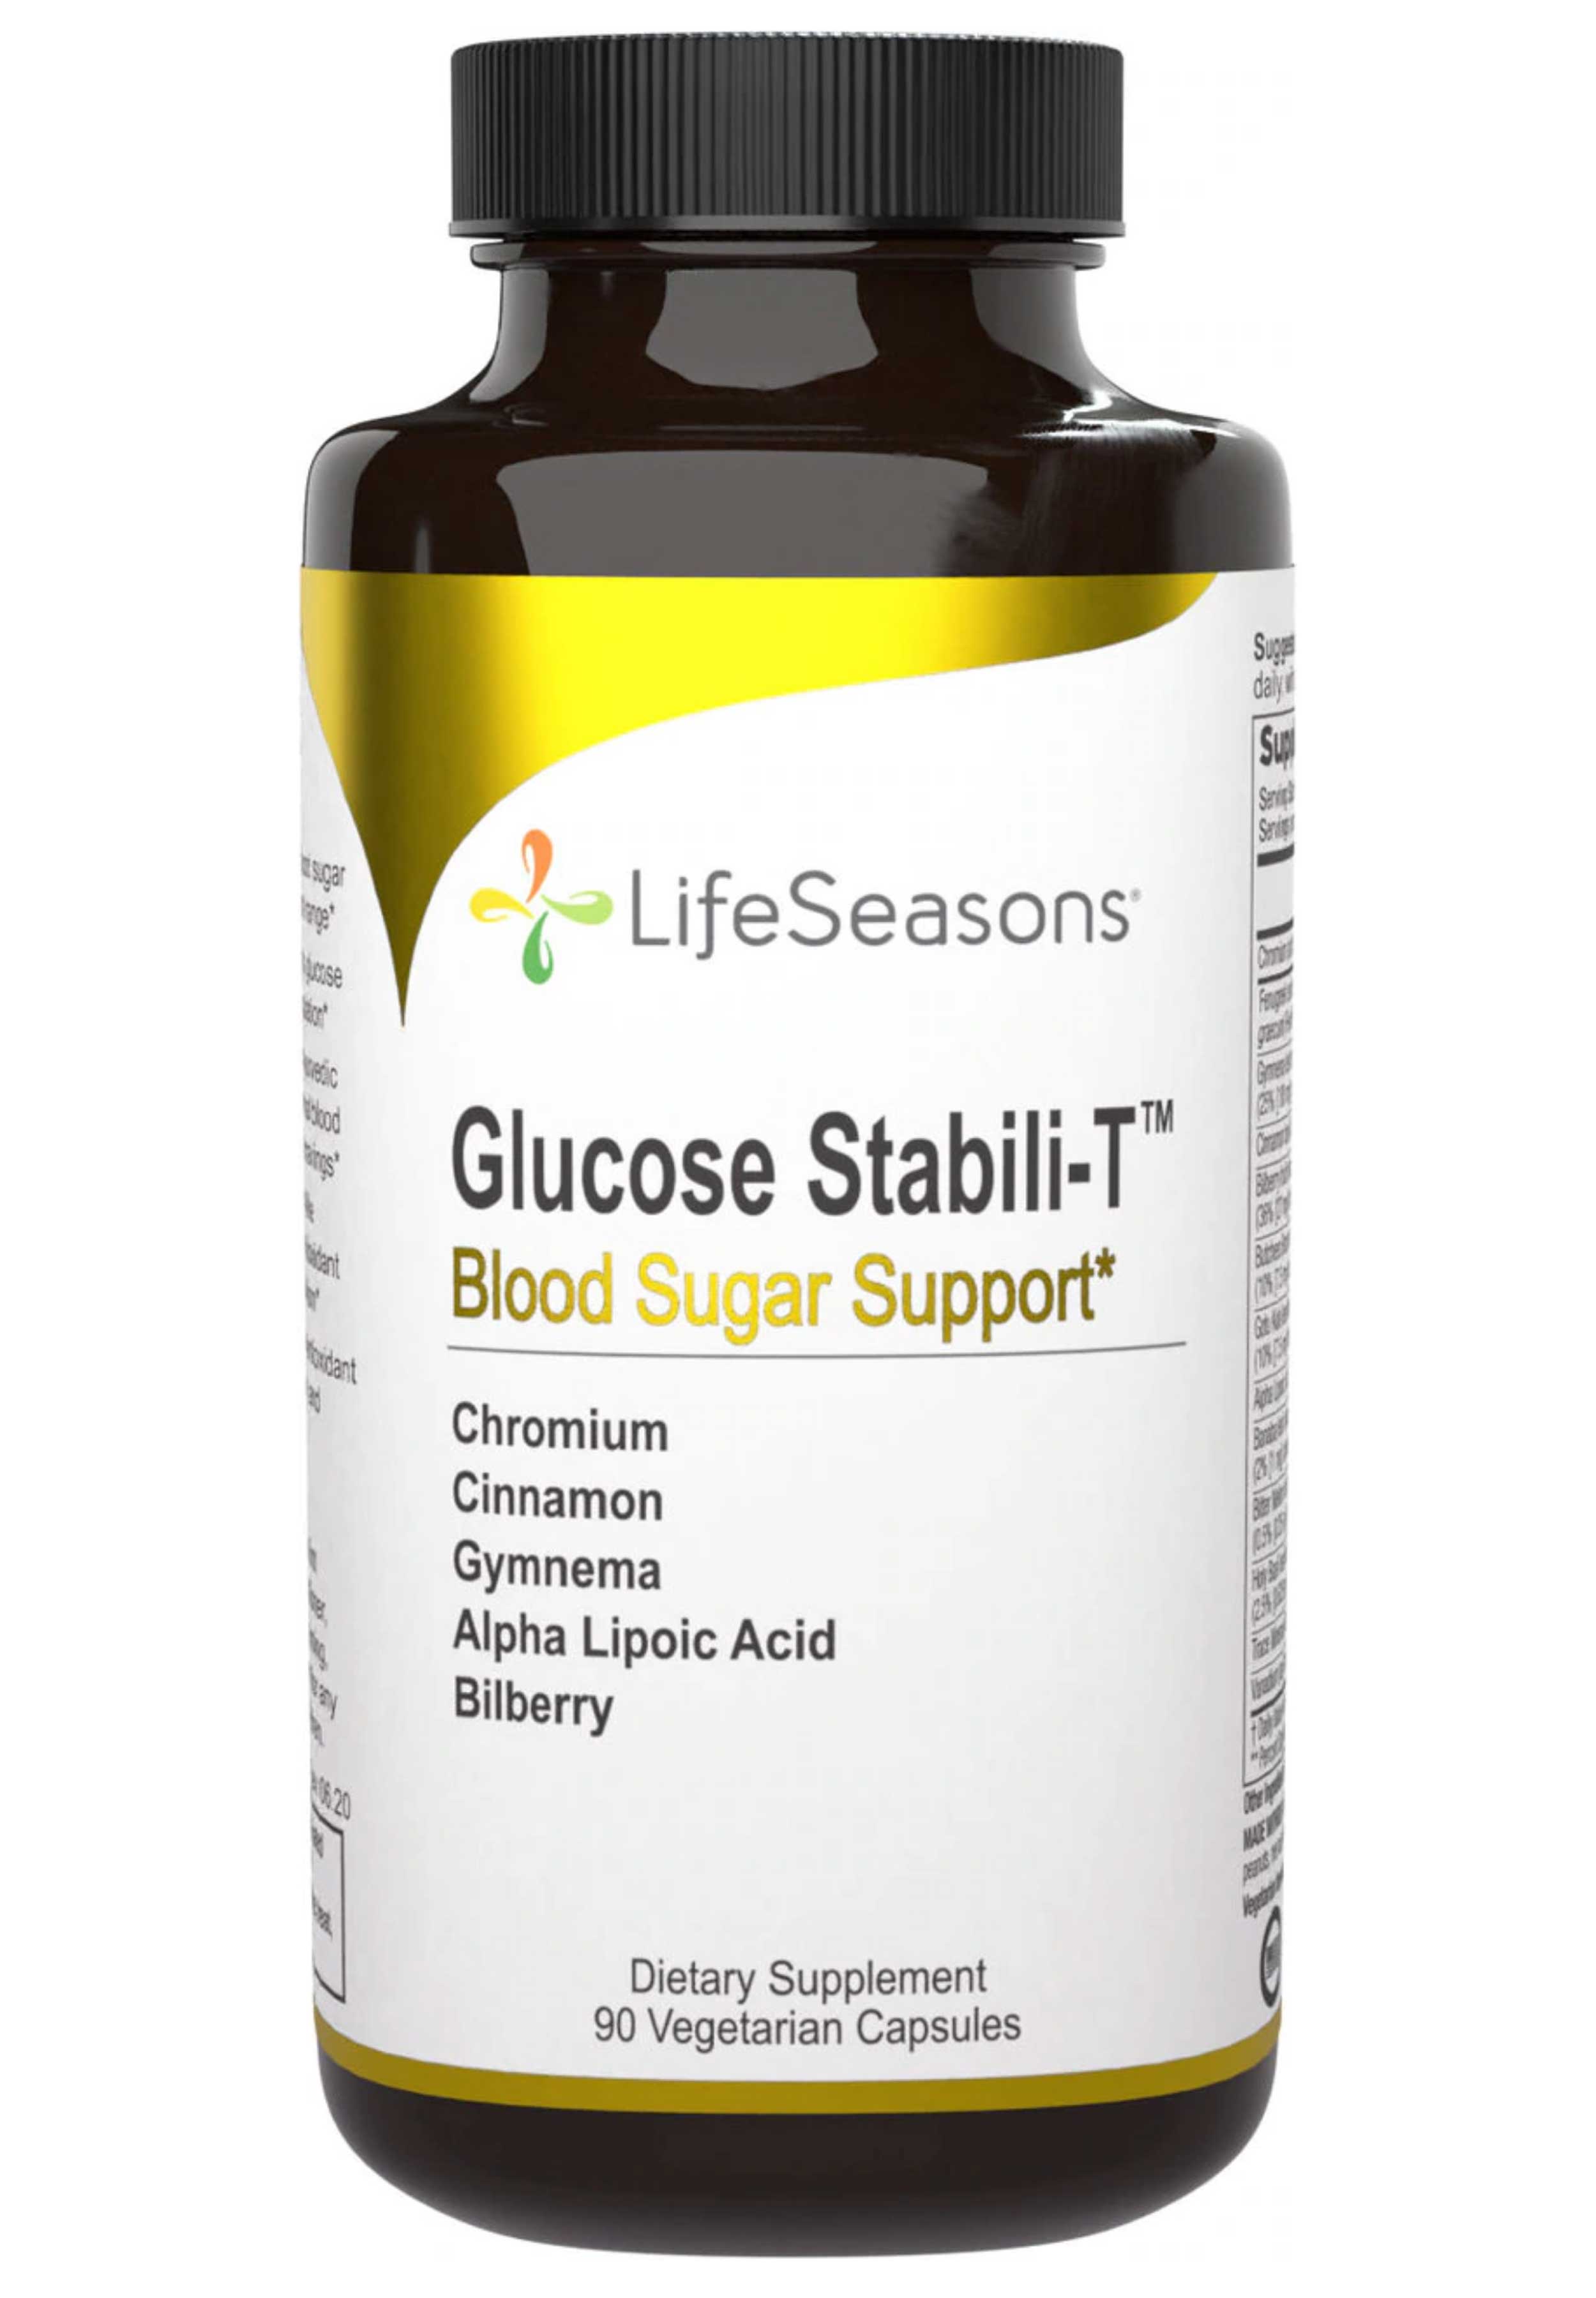 LifeSeasons Glucose Stabili-T